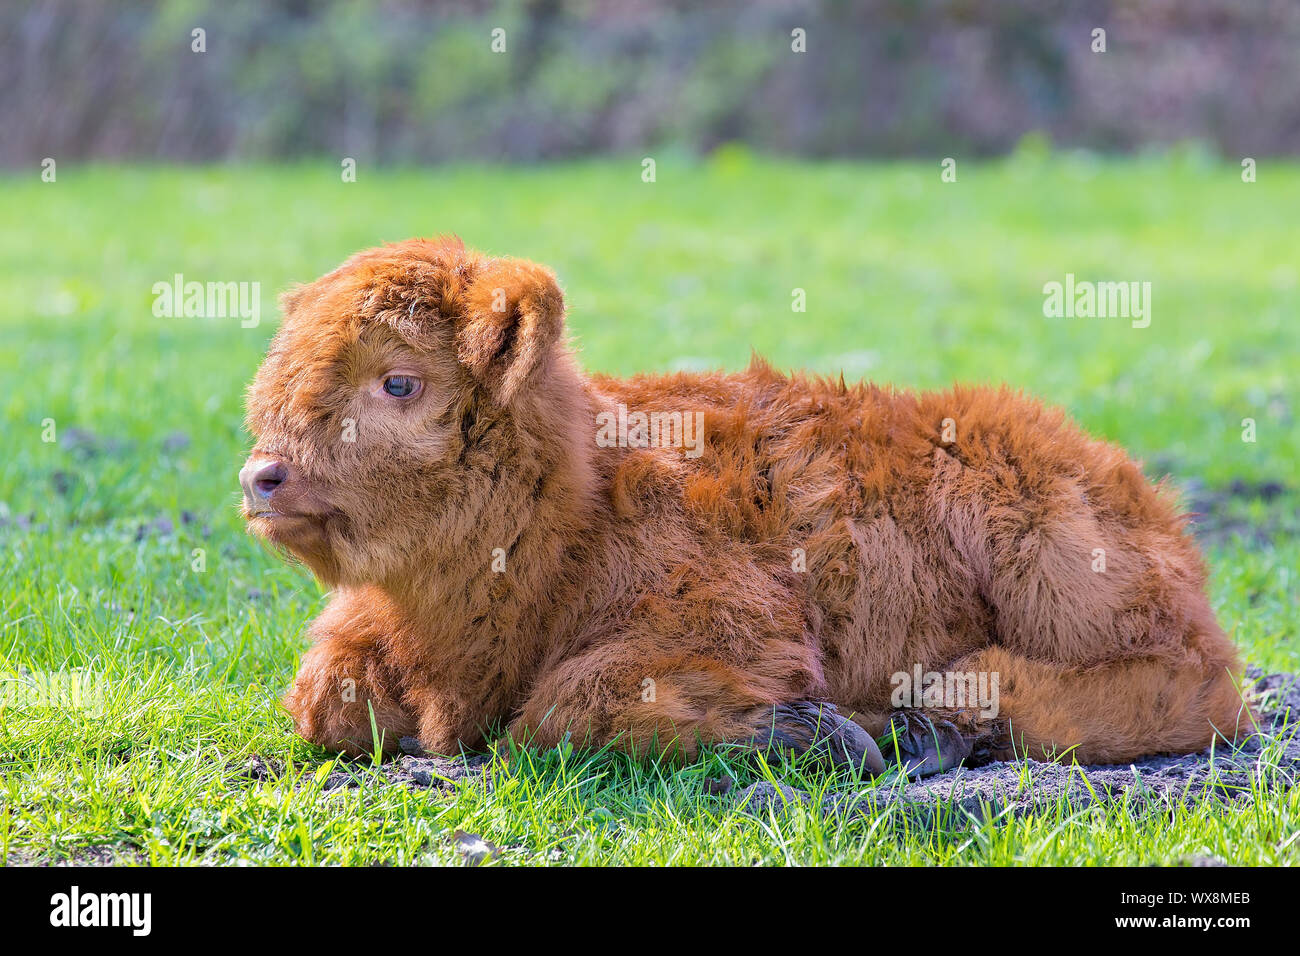 Bown newborn scottish highlander calf lying in meadow Stock Photo